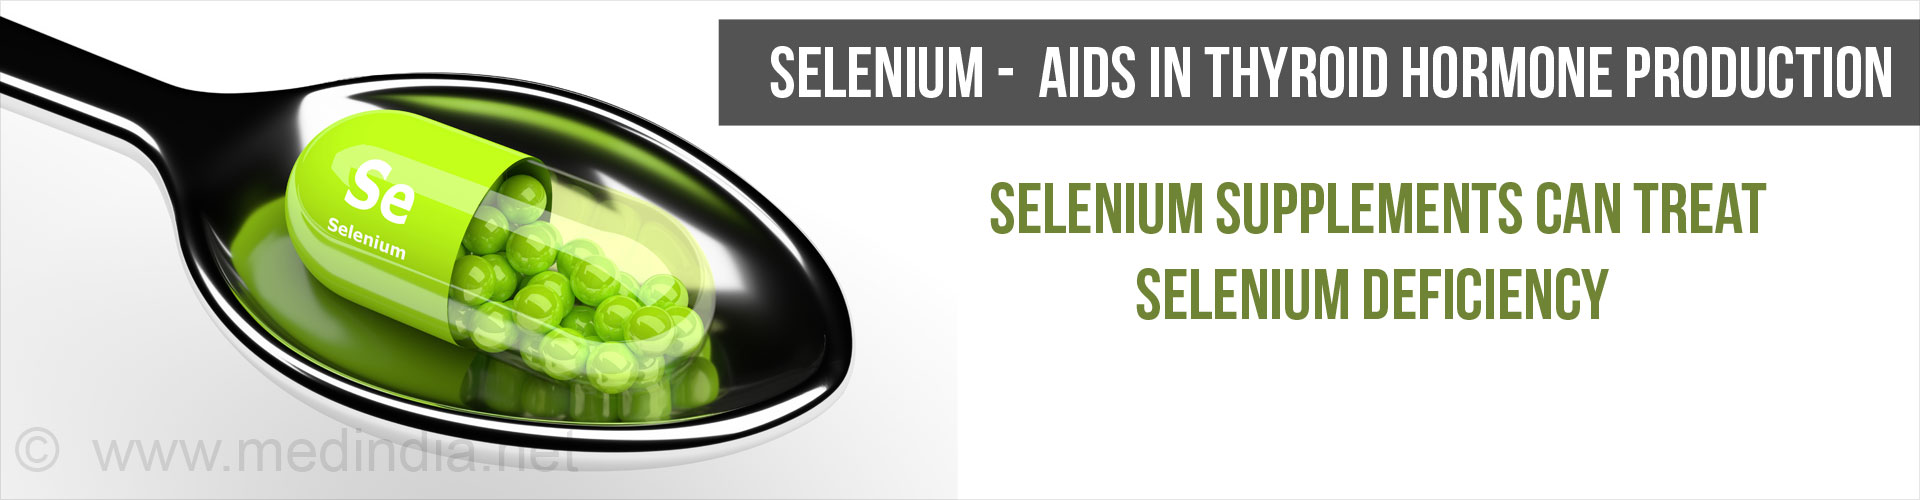 Selenium - Aids In Thyroid Hormone Production
Selenium supplements can treat selenium defeciency